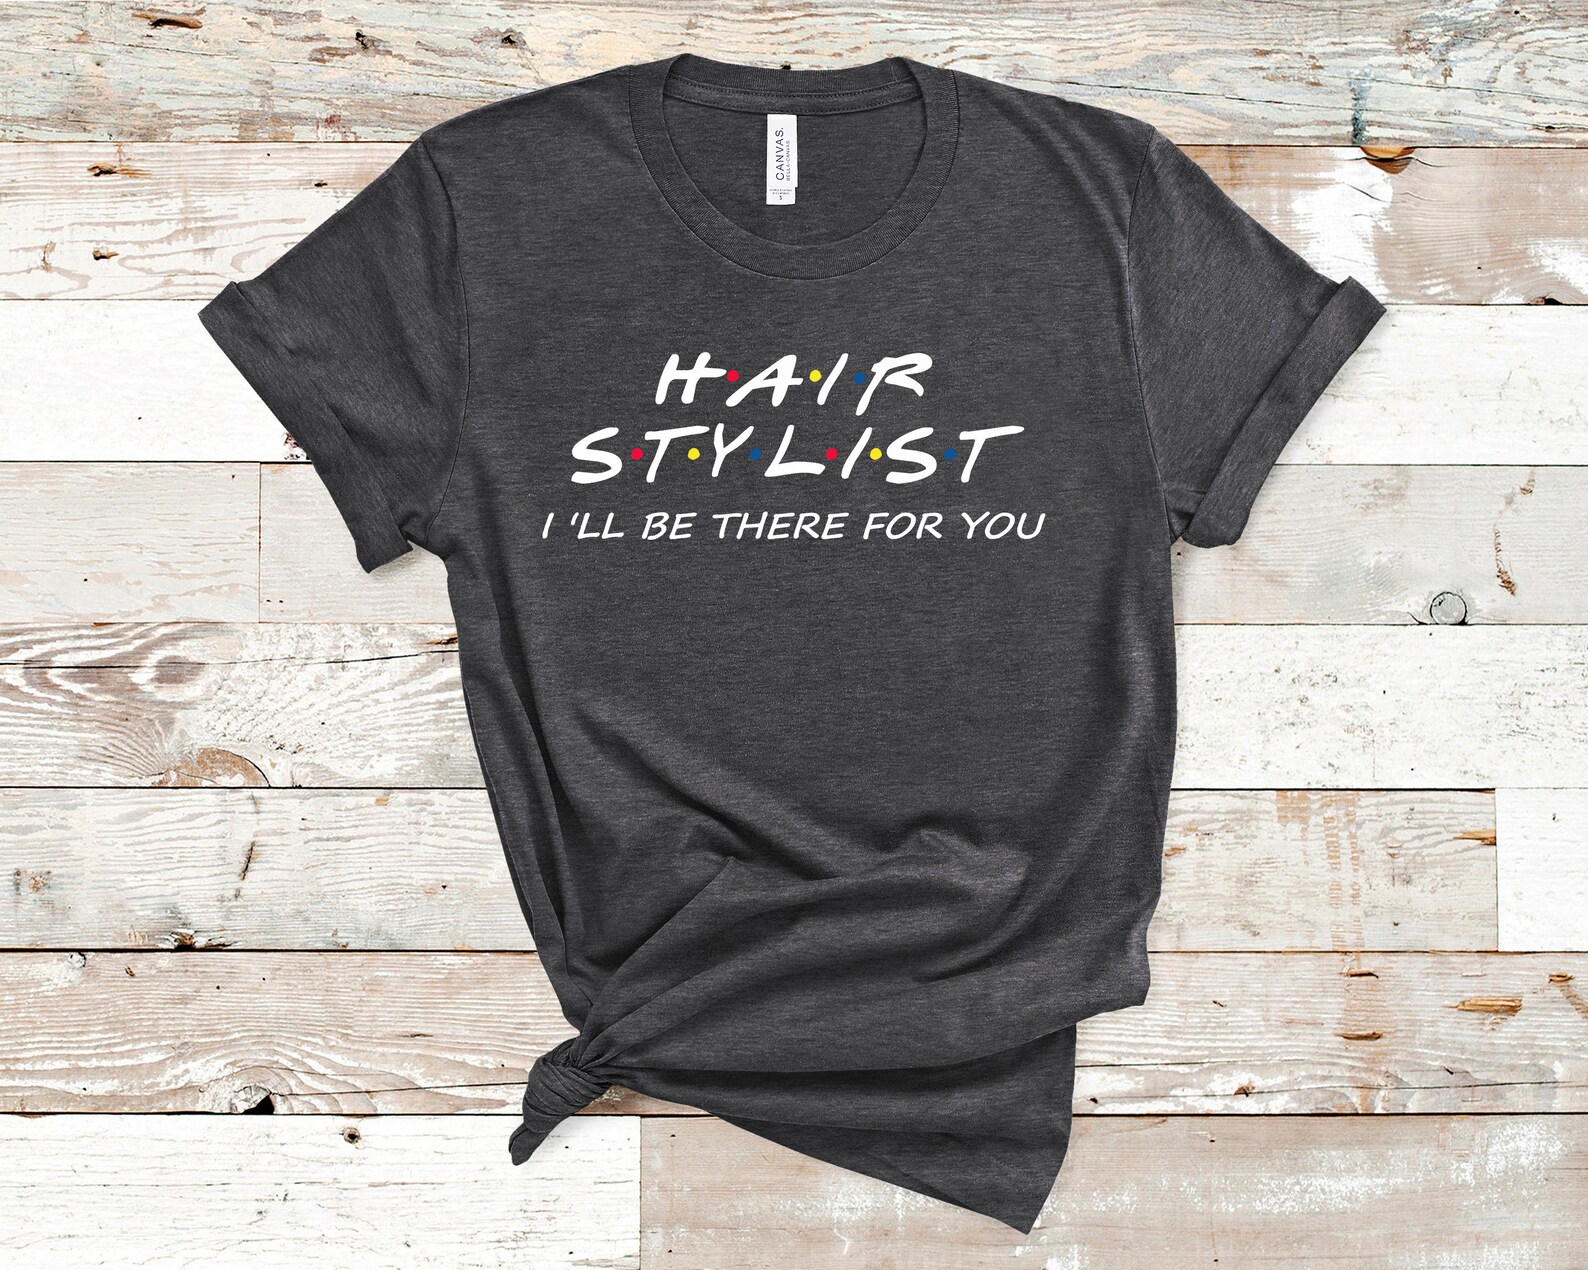 Friends style hair stylist t-shirt